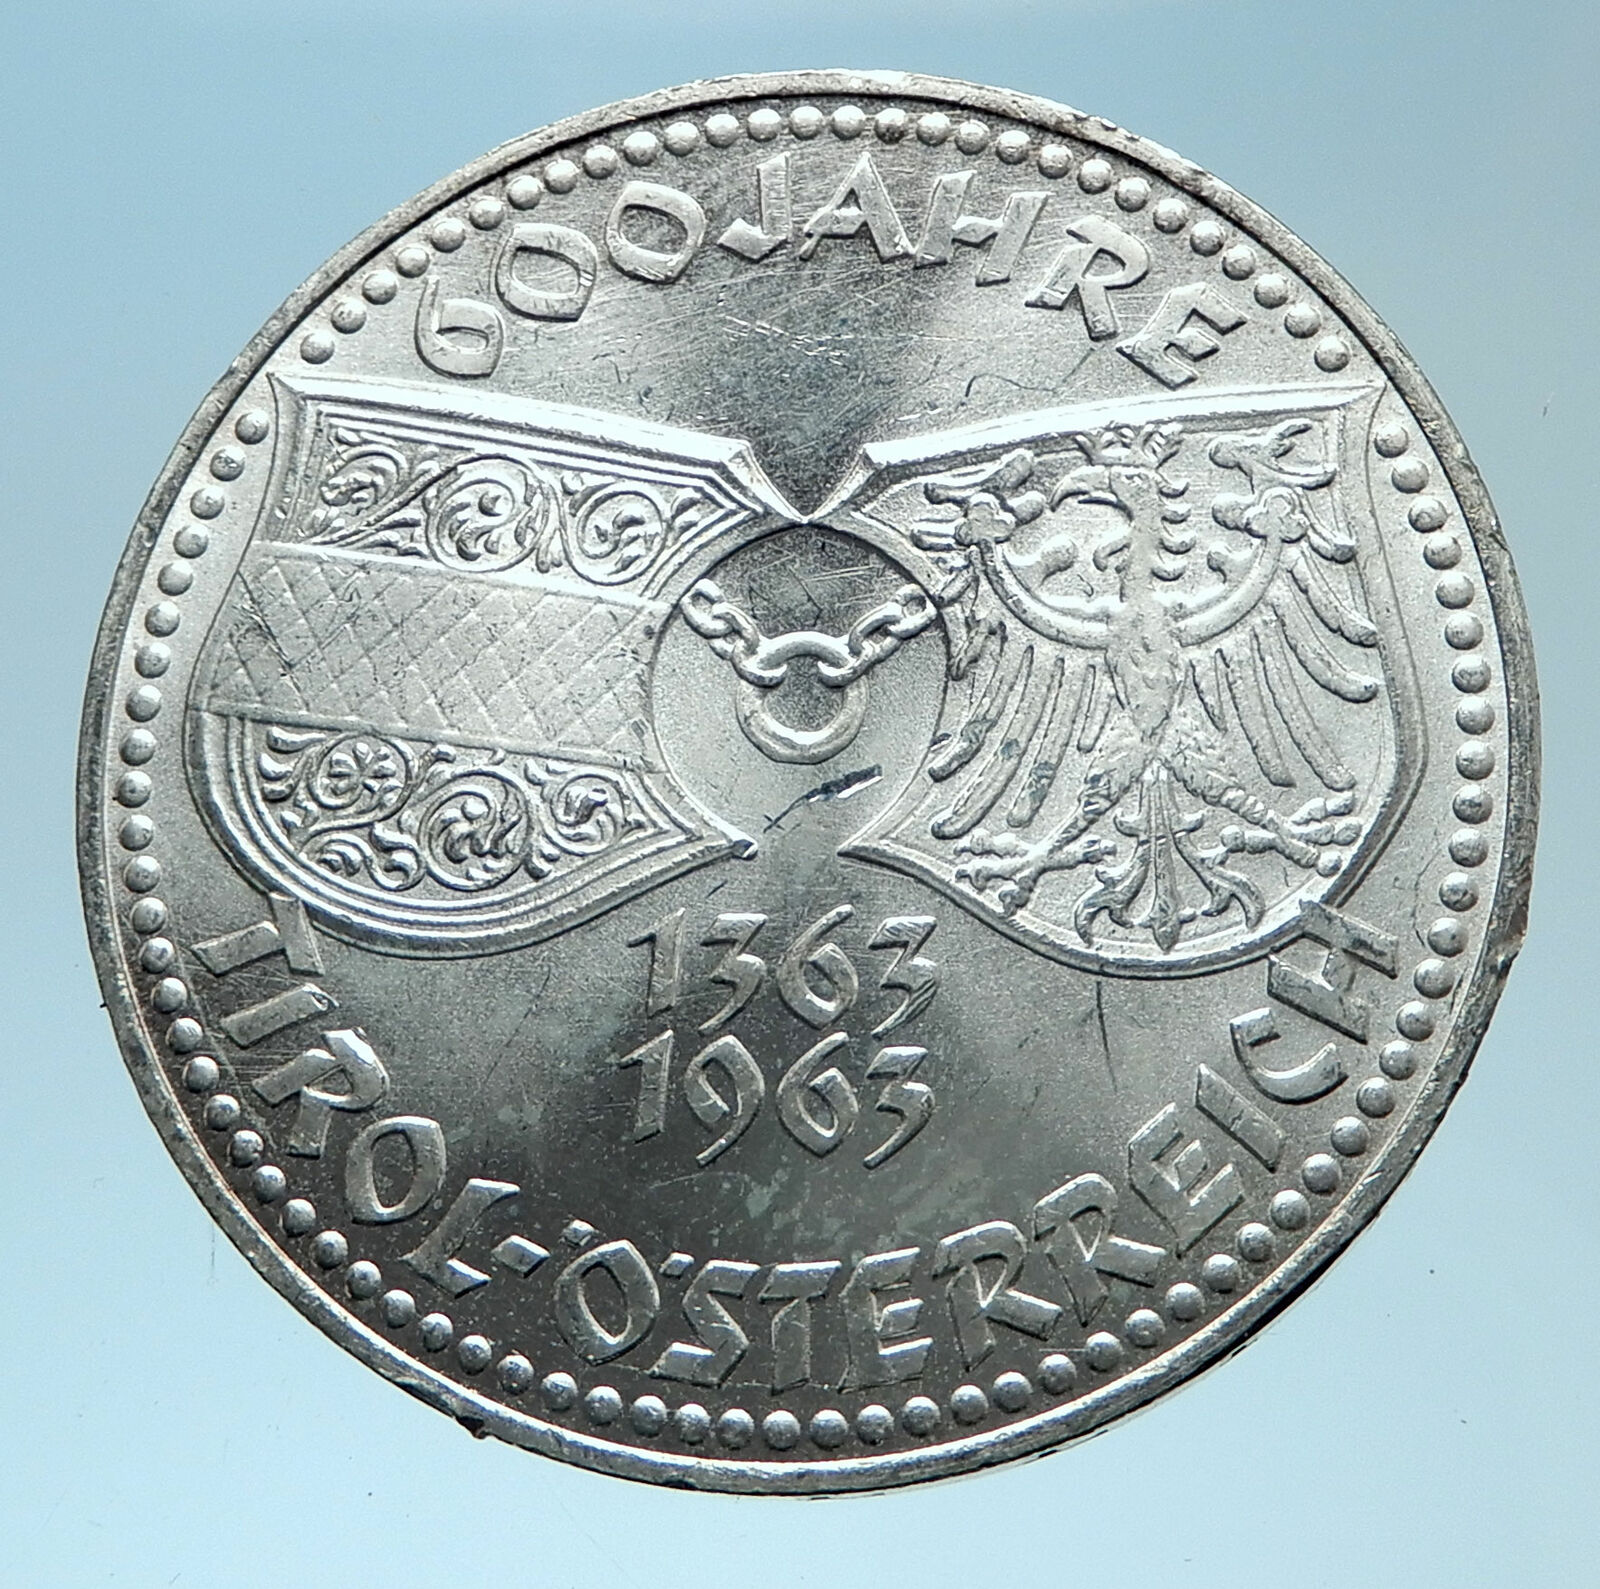 1963 AUSTRIA Tyrol and Austrian Shields Genuine Silver 50 Shilling Coin i78085